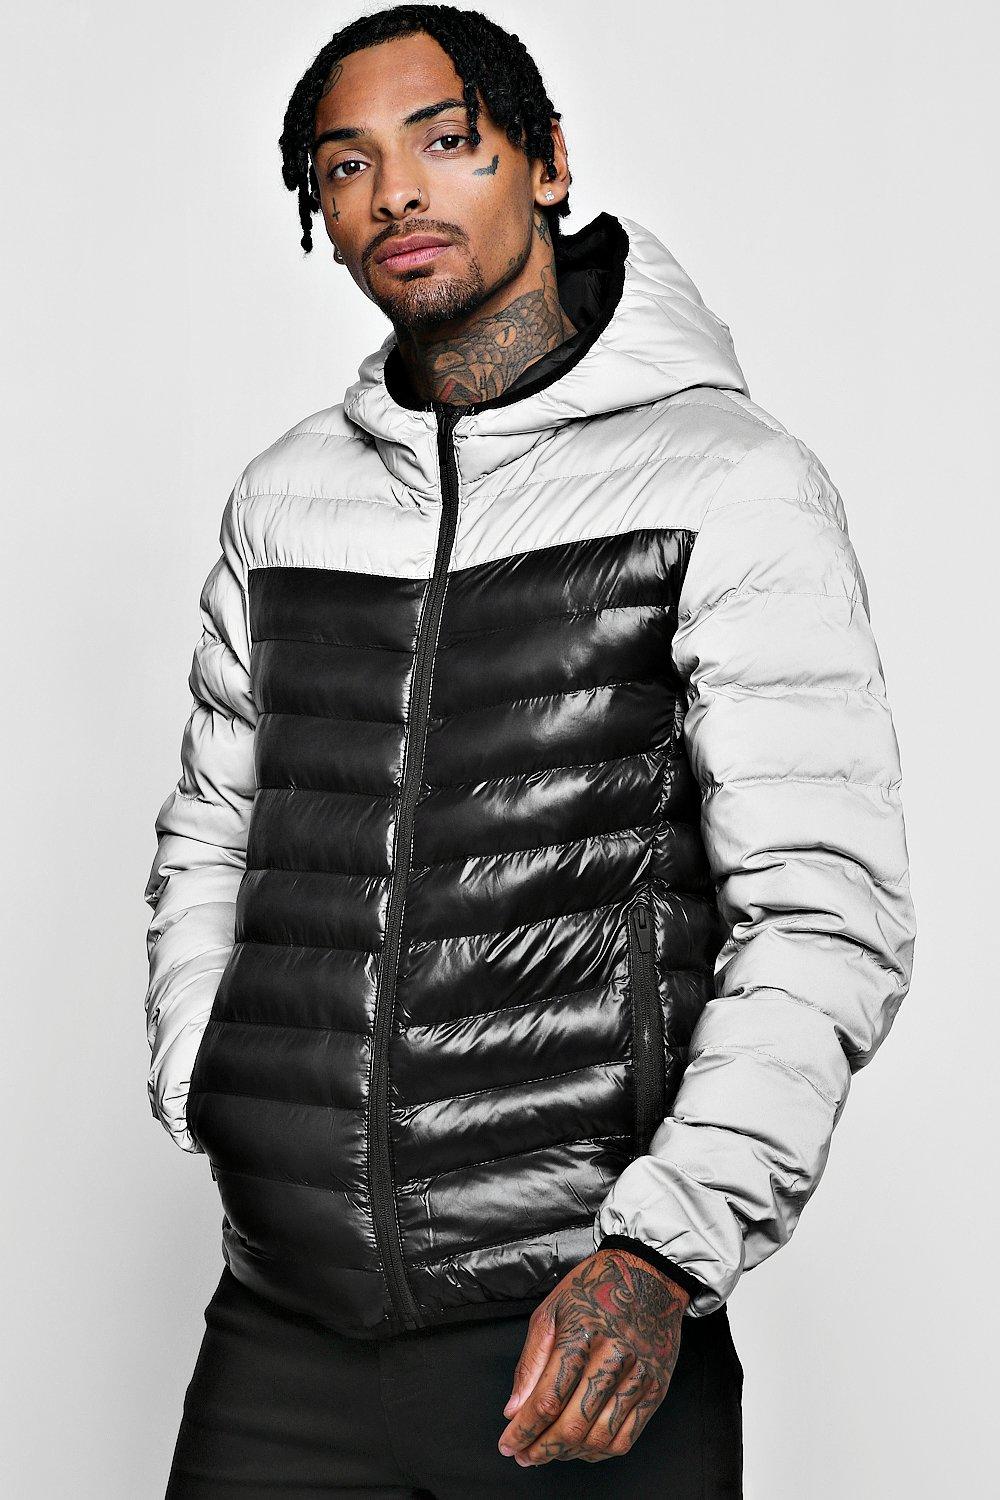 Boohoo Mens Reflective Contrast Puffer Jacket | eBay